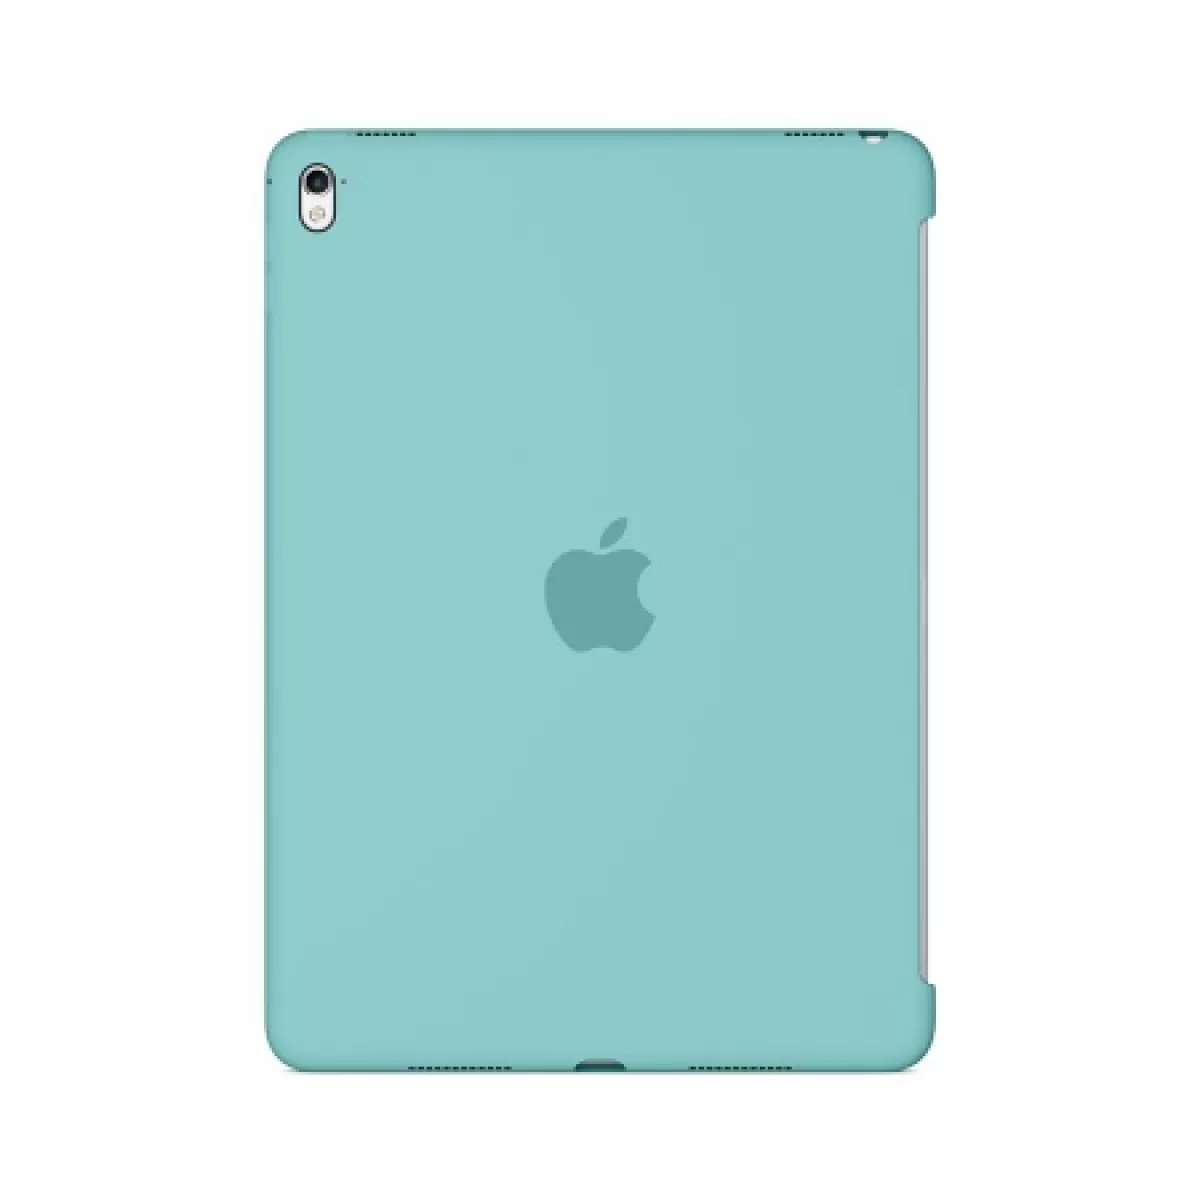 Apple Silicone Case for iPad Pro 9.7inch Sea Blue